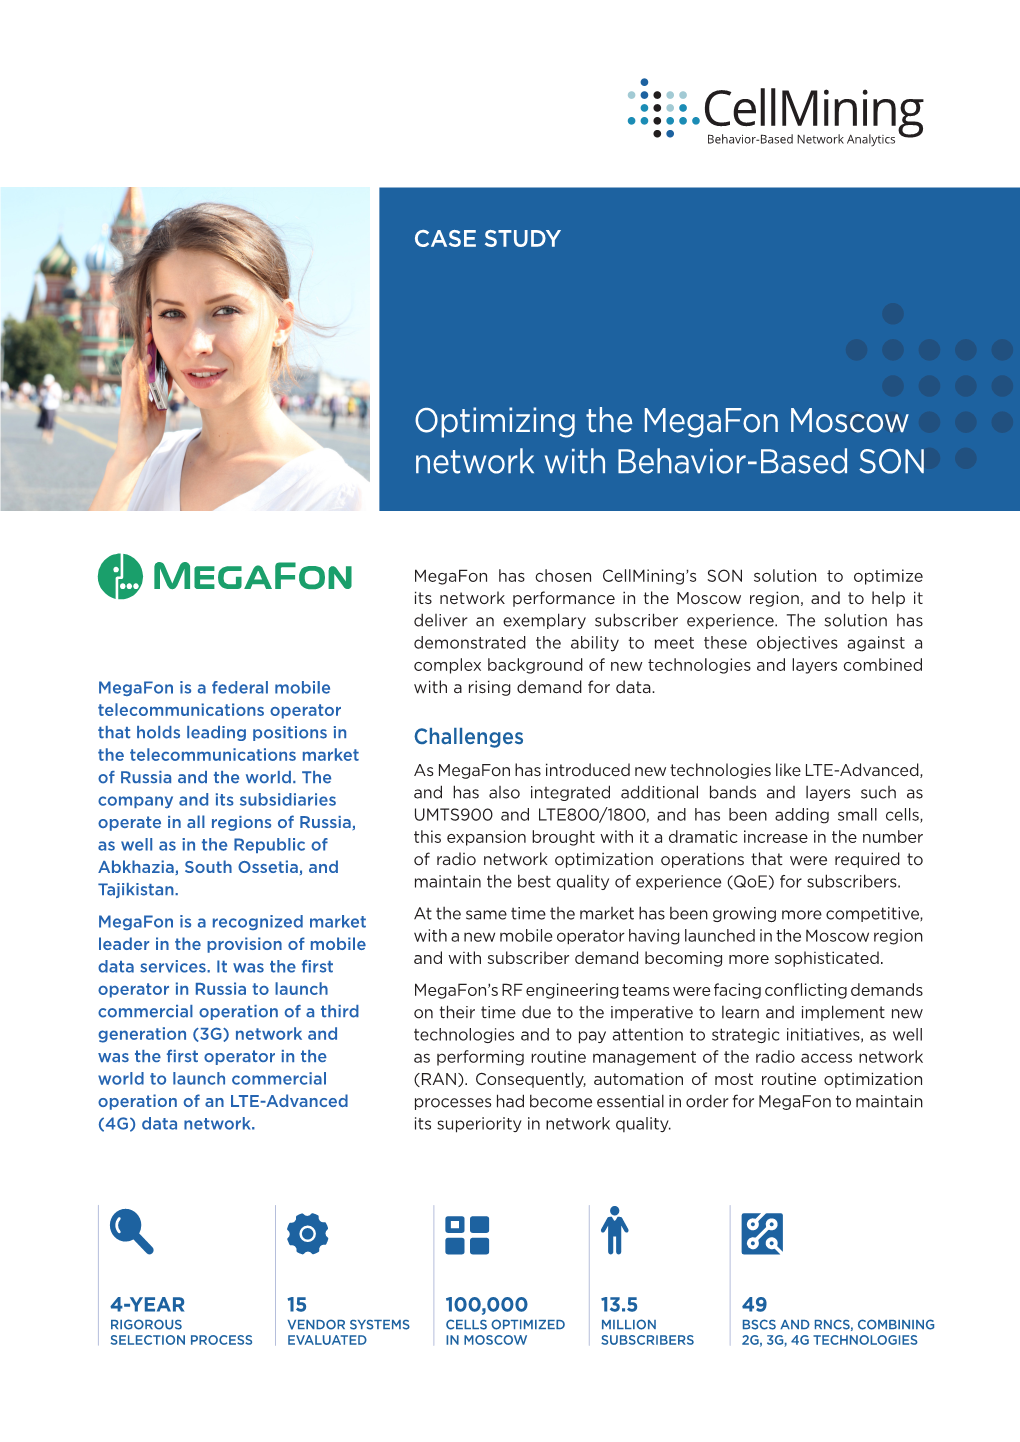 Optimizing the Megafon Moscow Network with Behavior-Based SON